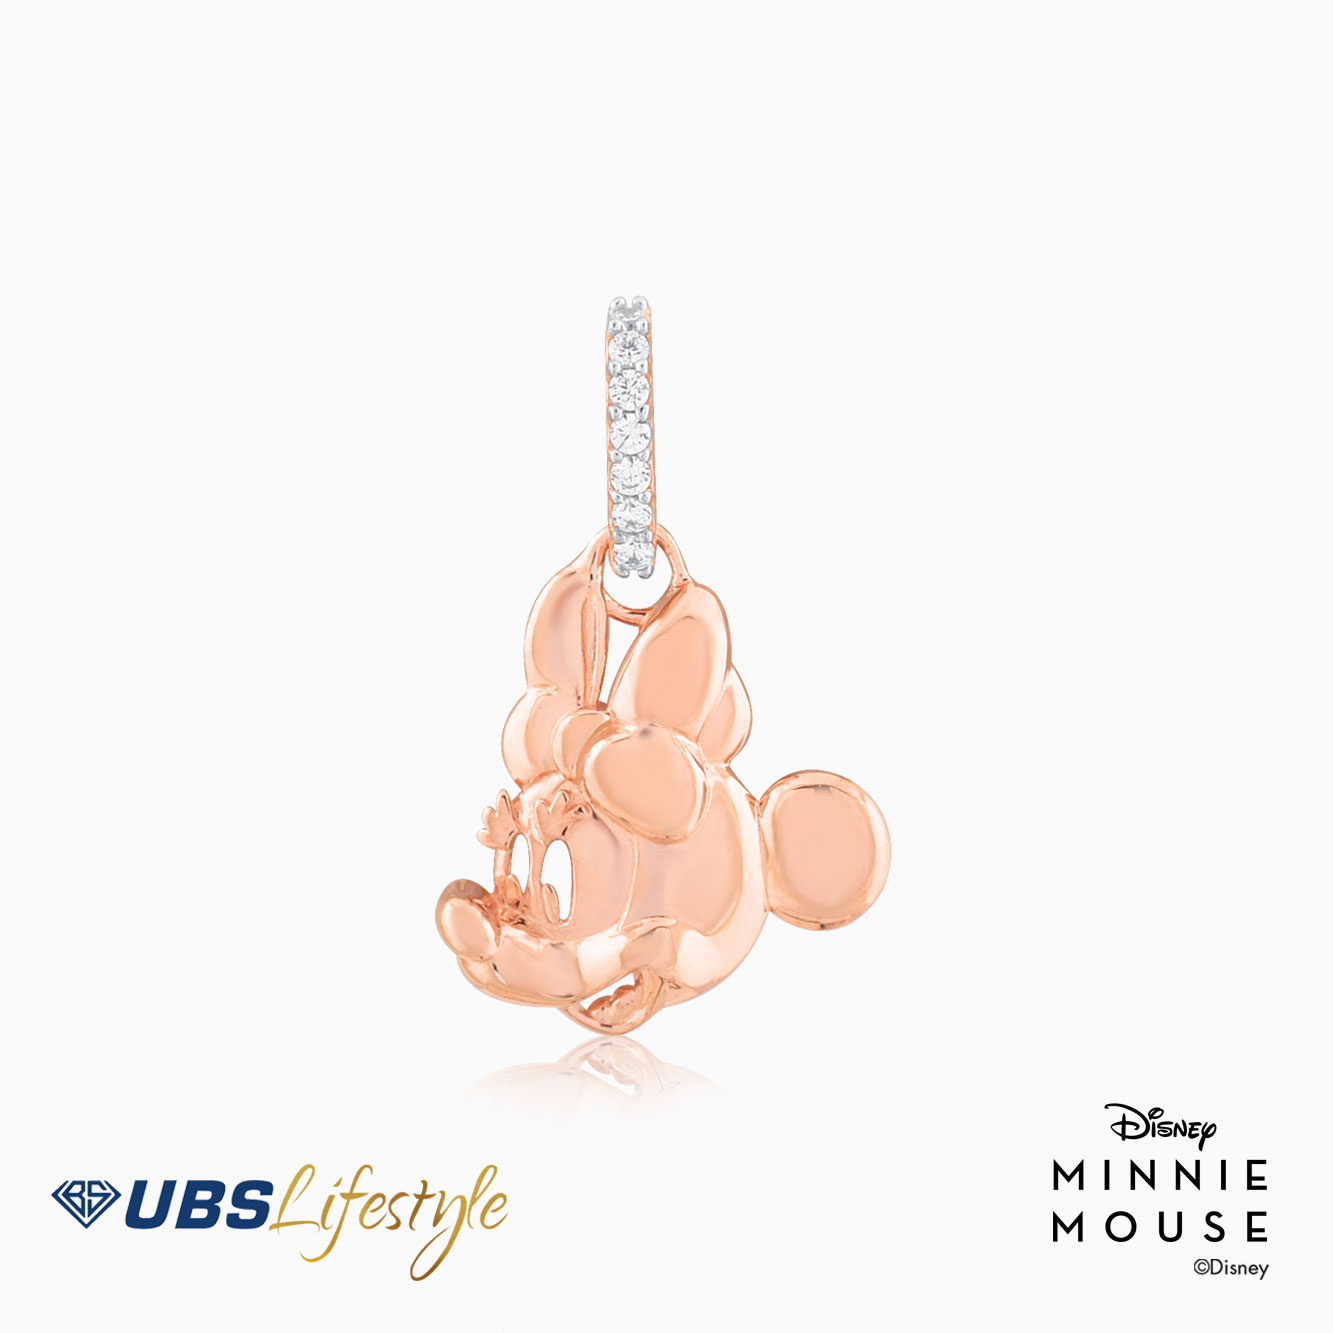 UBS Liontin Emas Disney Minnie Mouse - Cly0011 - 17K